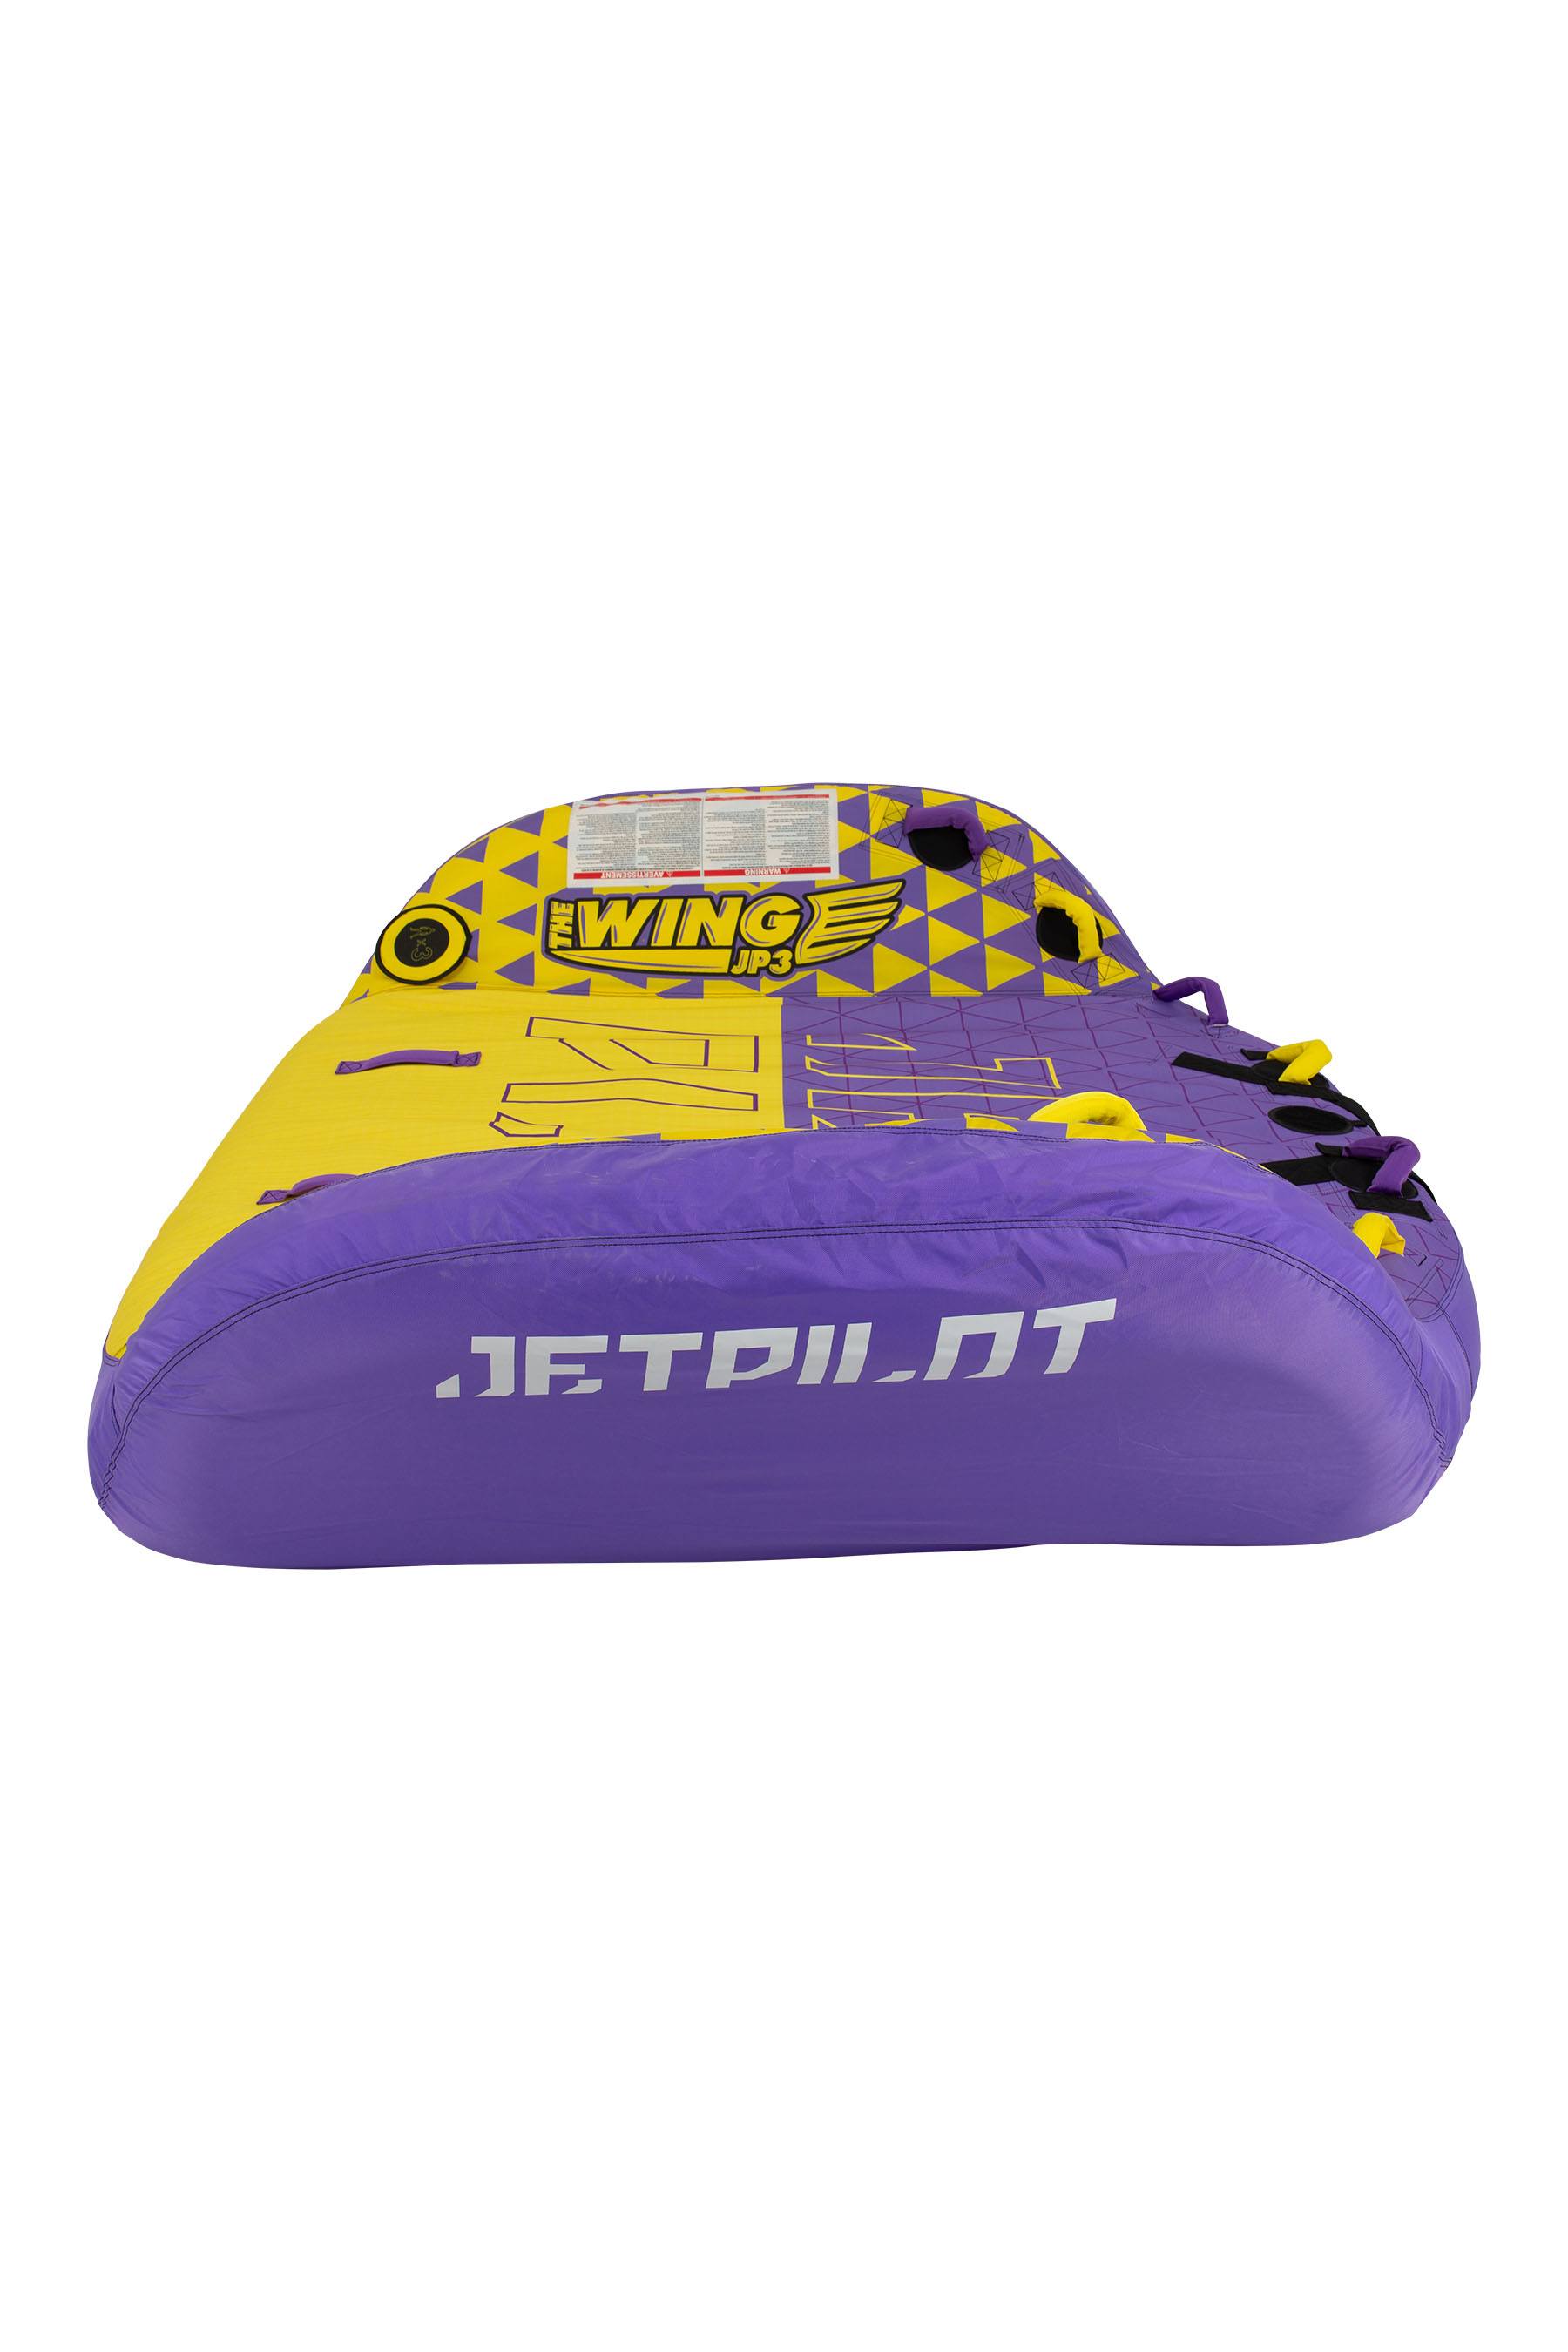 Jetpilot JP3 Wing Towable - Yellow/Purple 6